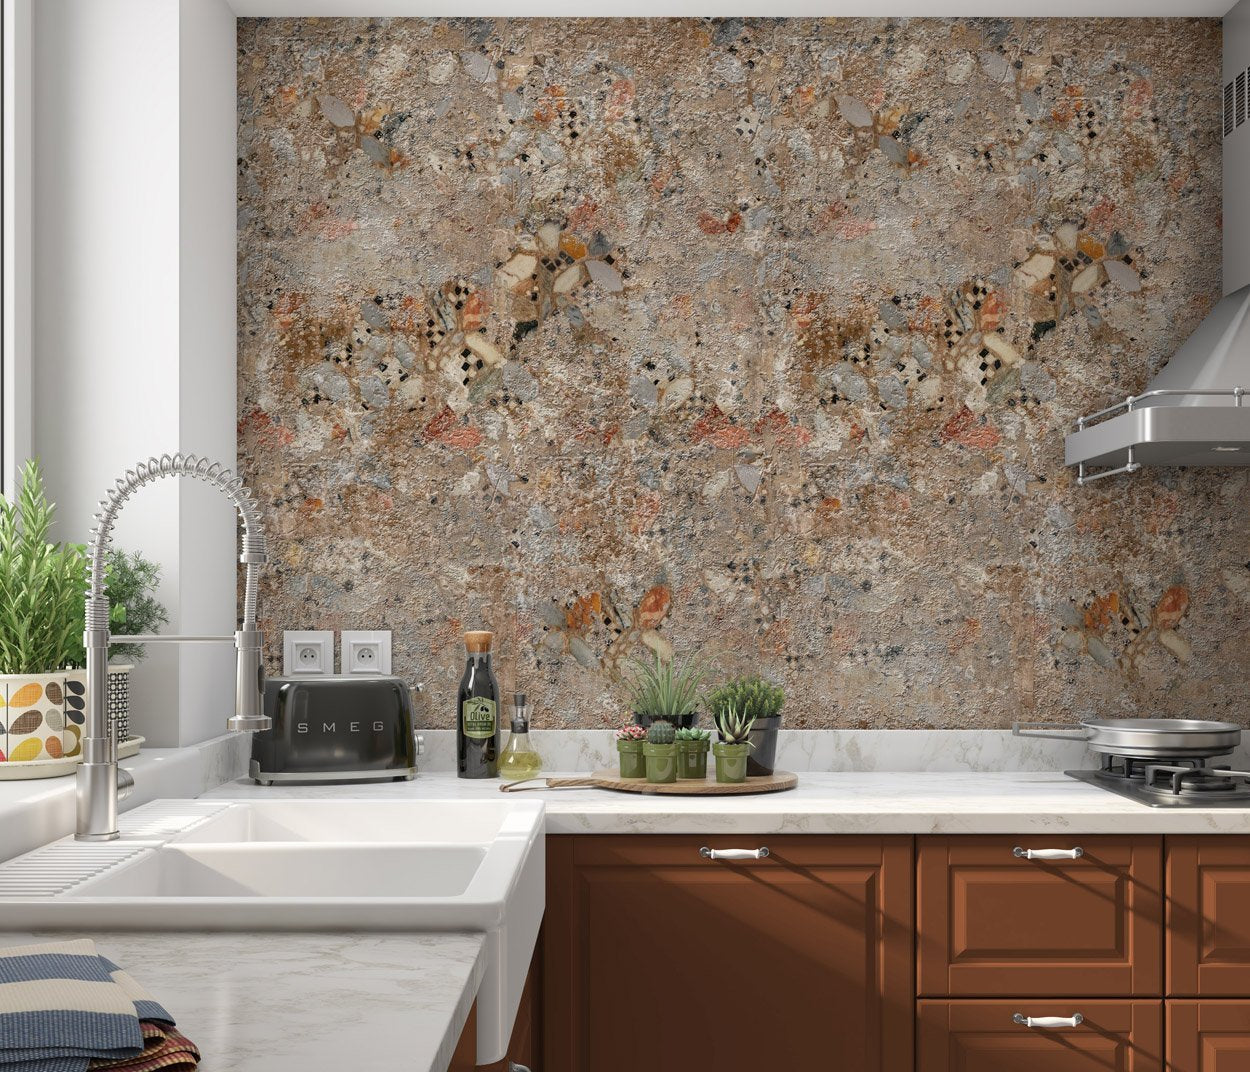 Kitchen wall - Mosaic / Stucco / Tile